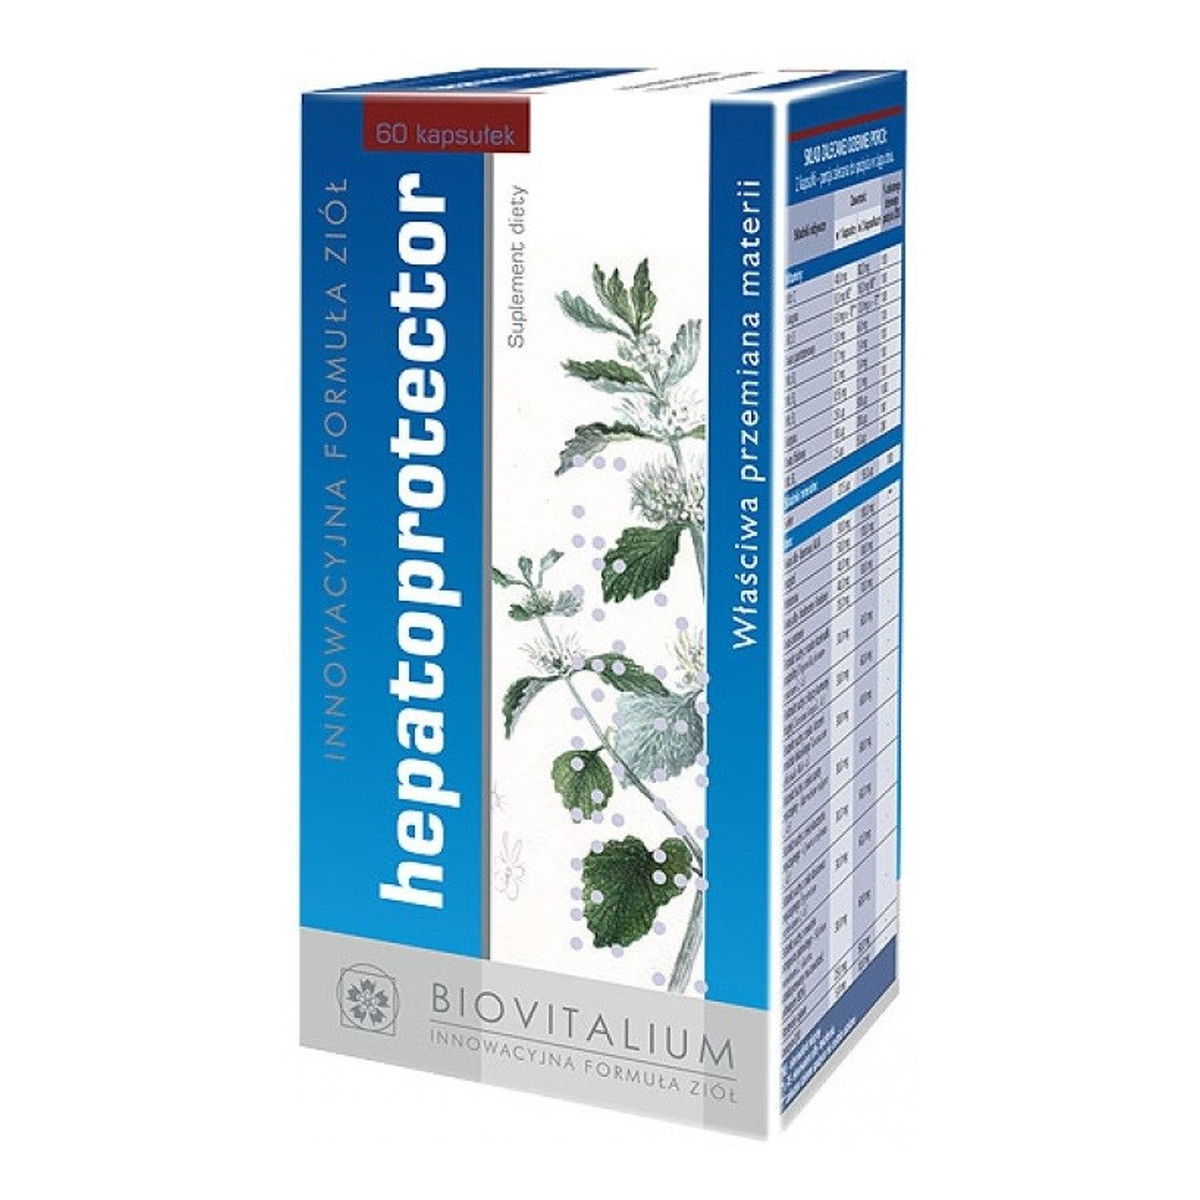 Biovitalium Hepatoprotector właściwa przemiana materii suplement diety 60 kapsułek